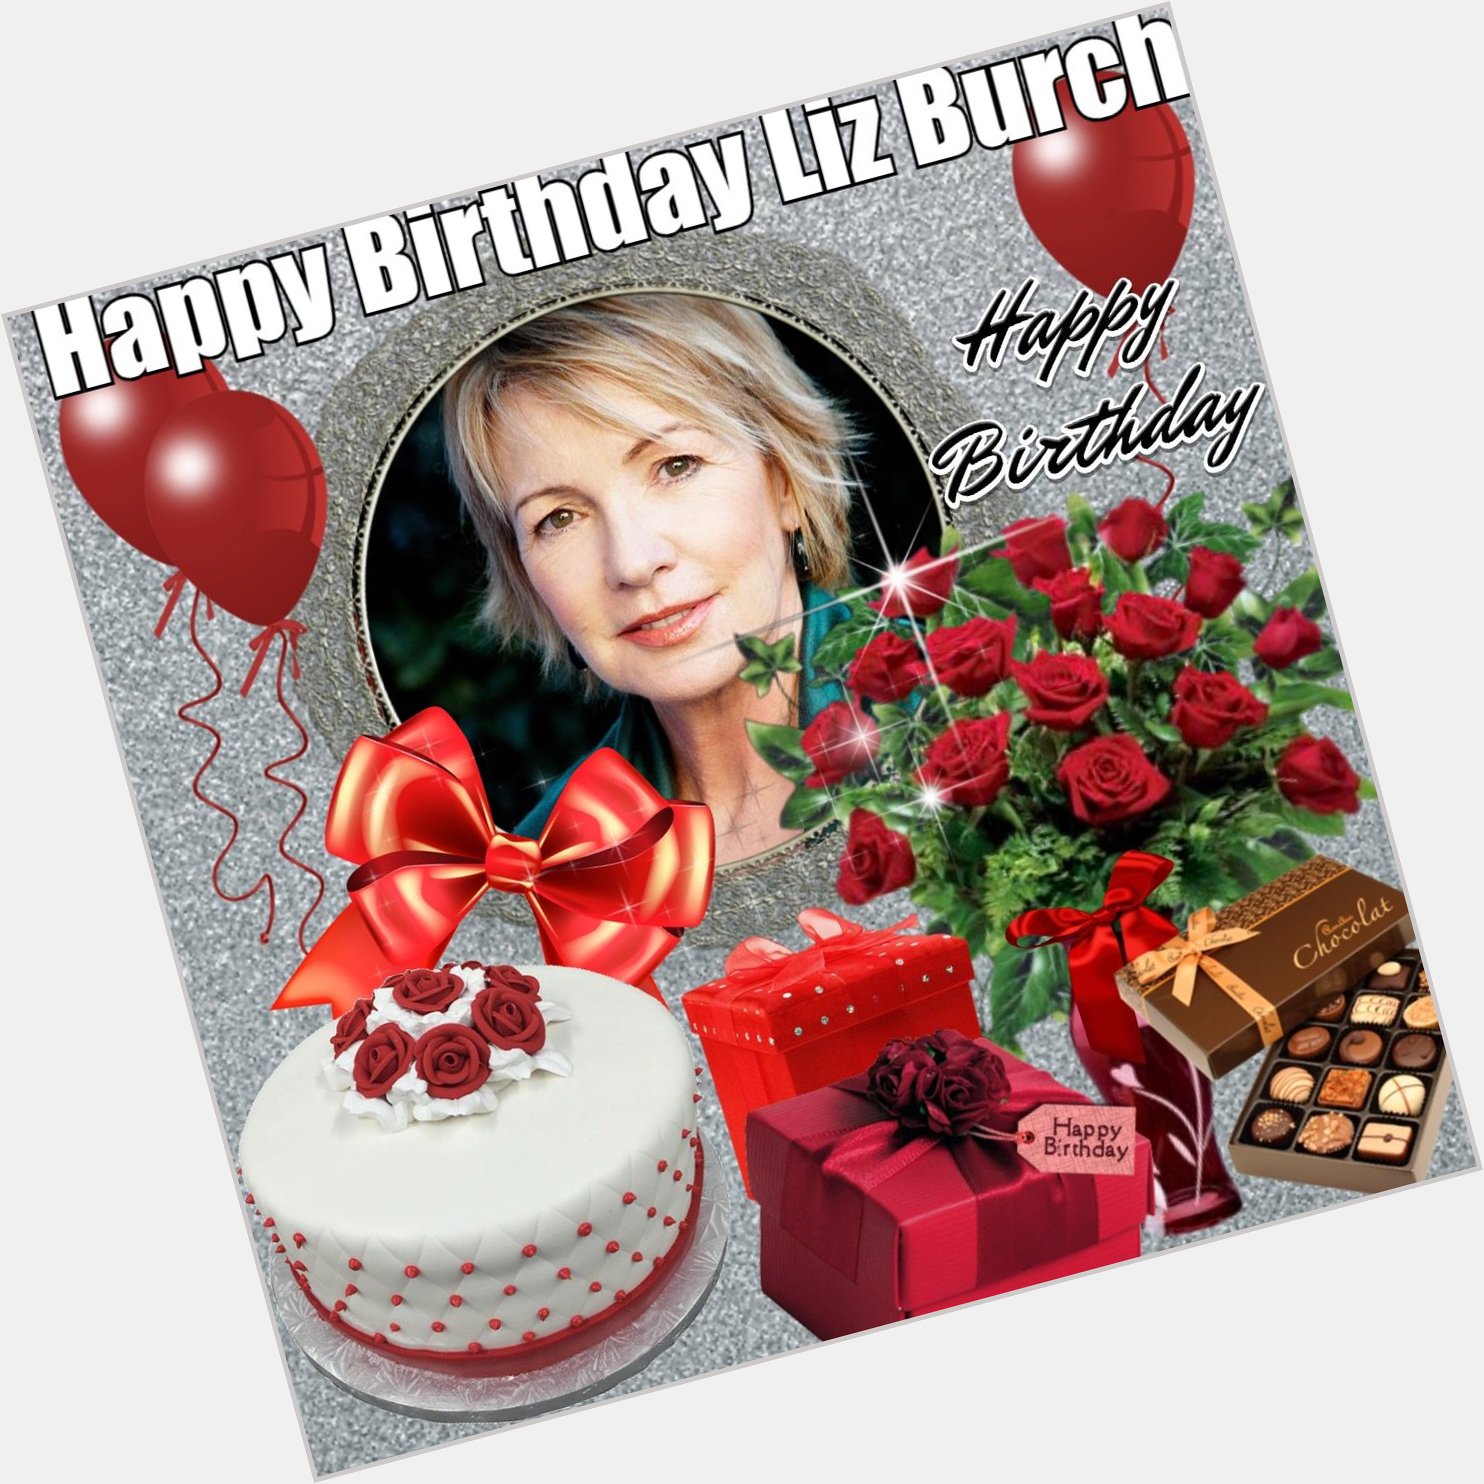 Happy Birthday to LIZ BURCH 